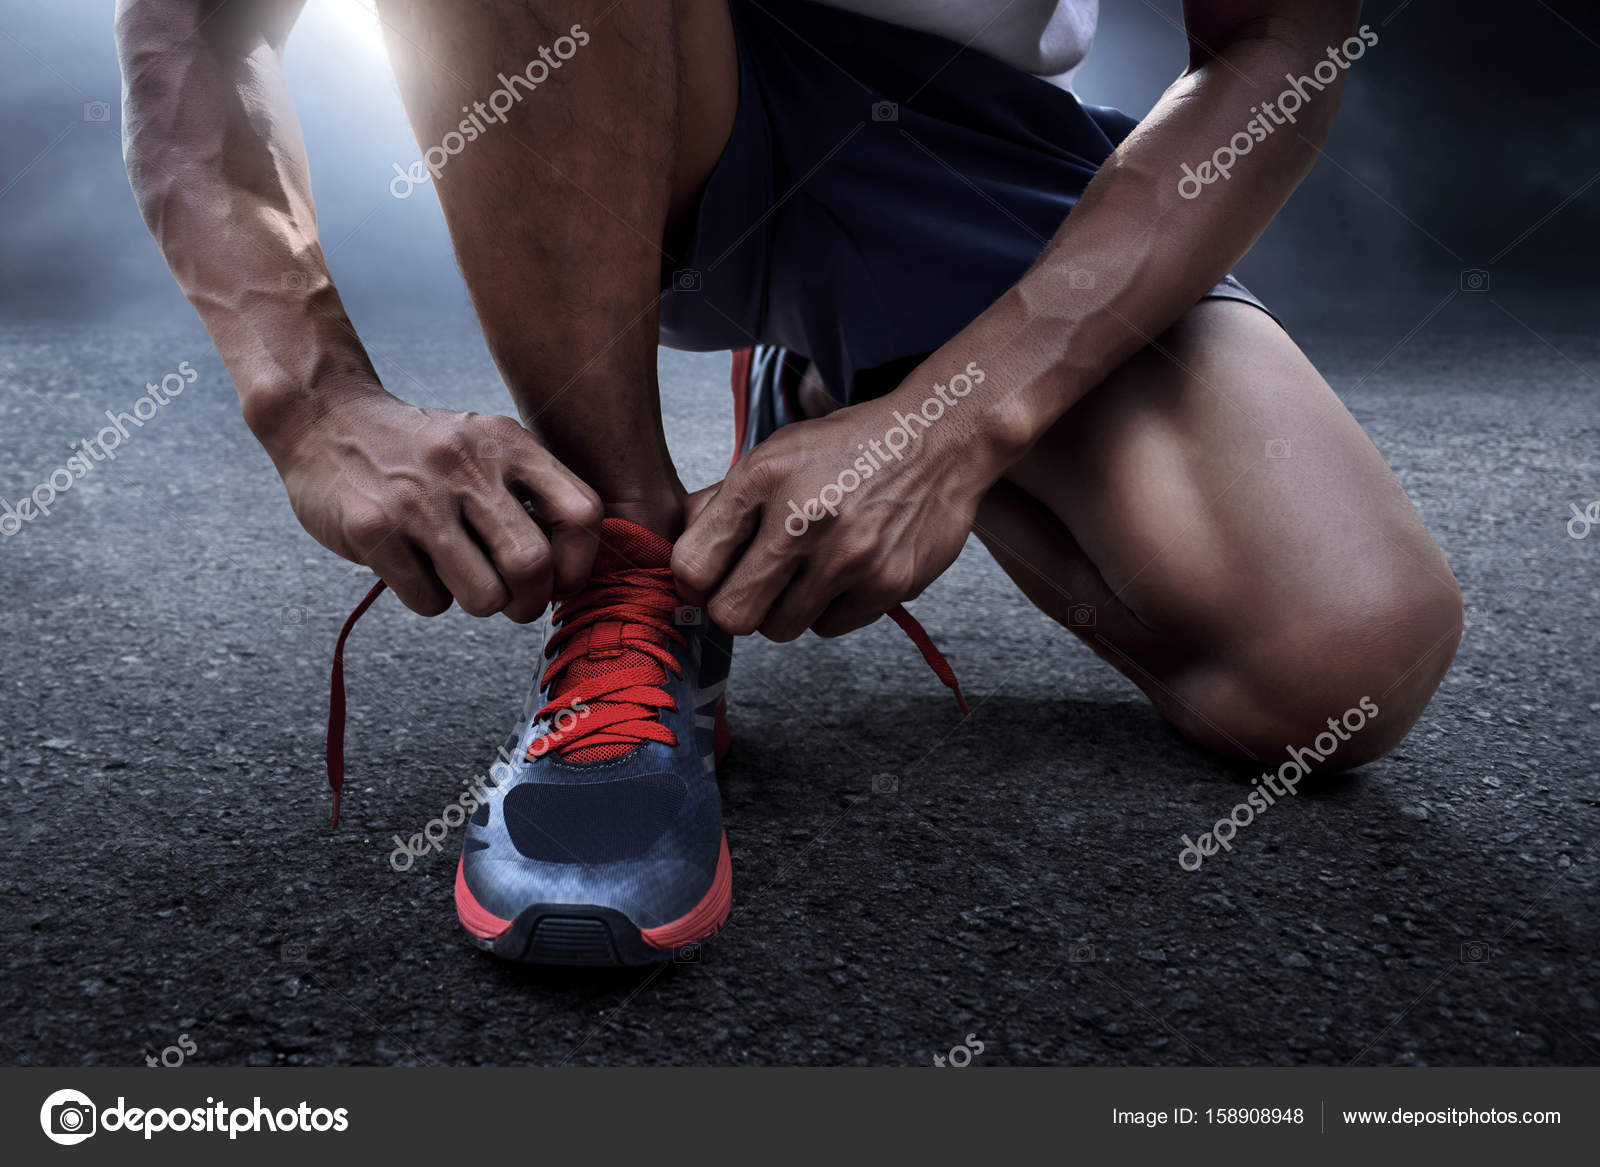 tying running shoes